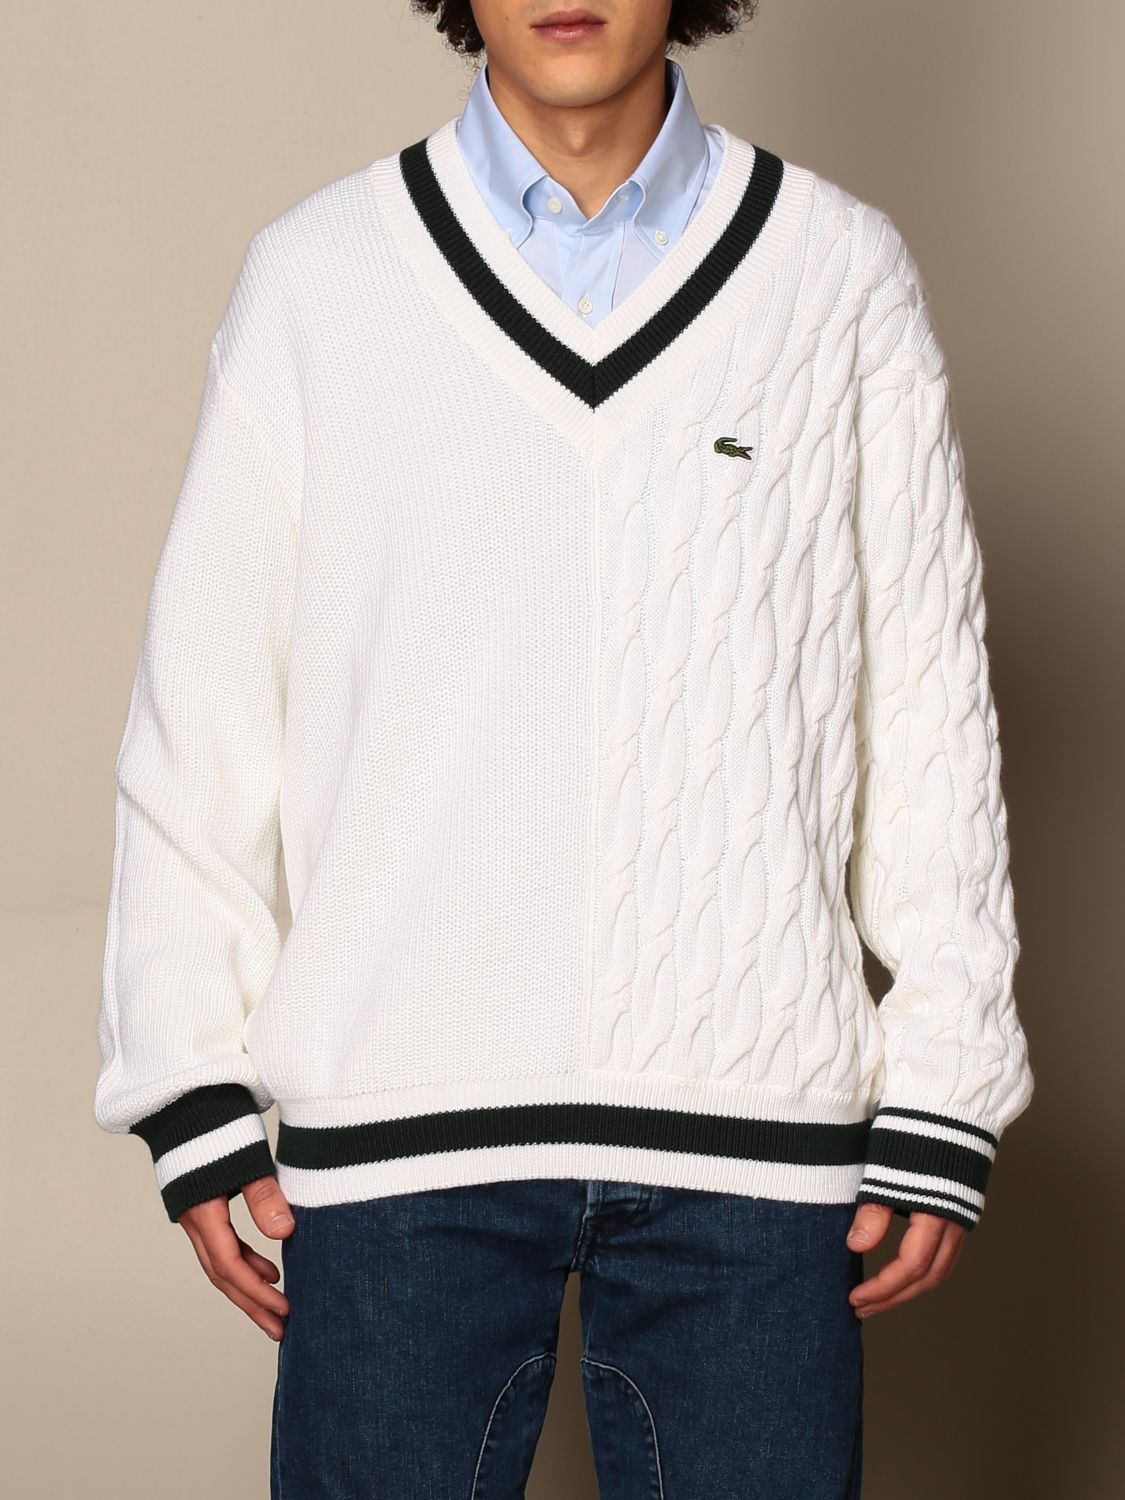 lacoste white v neck sweater